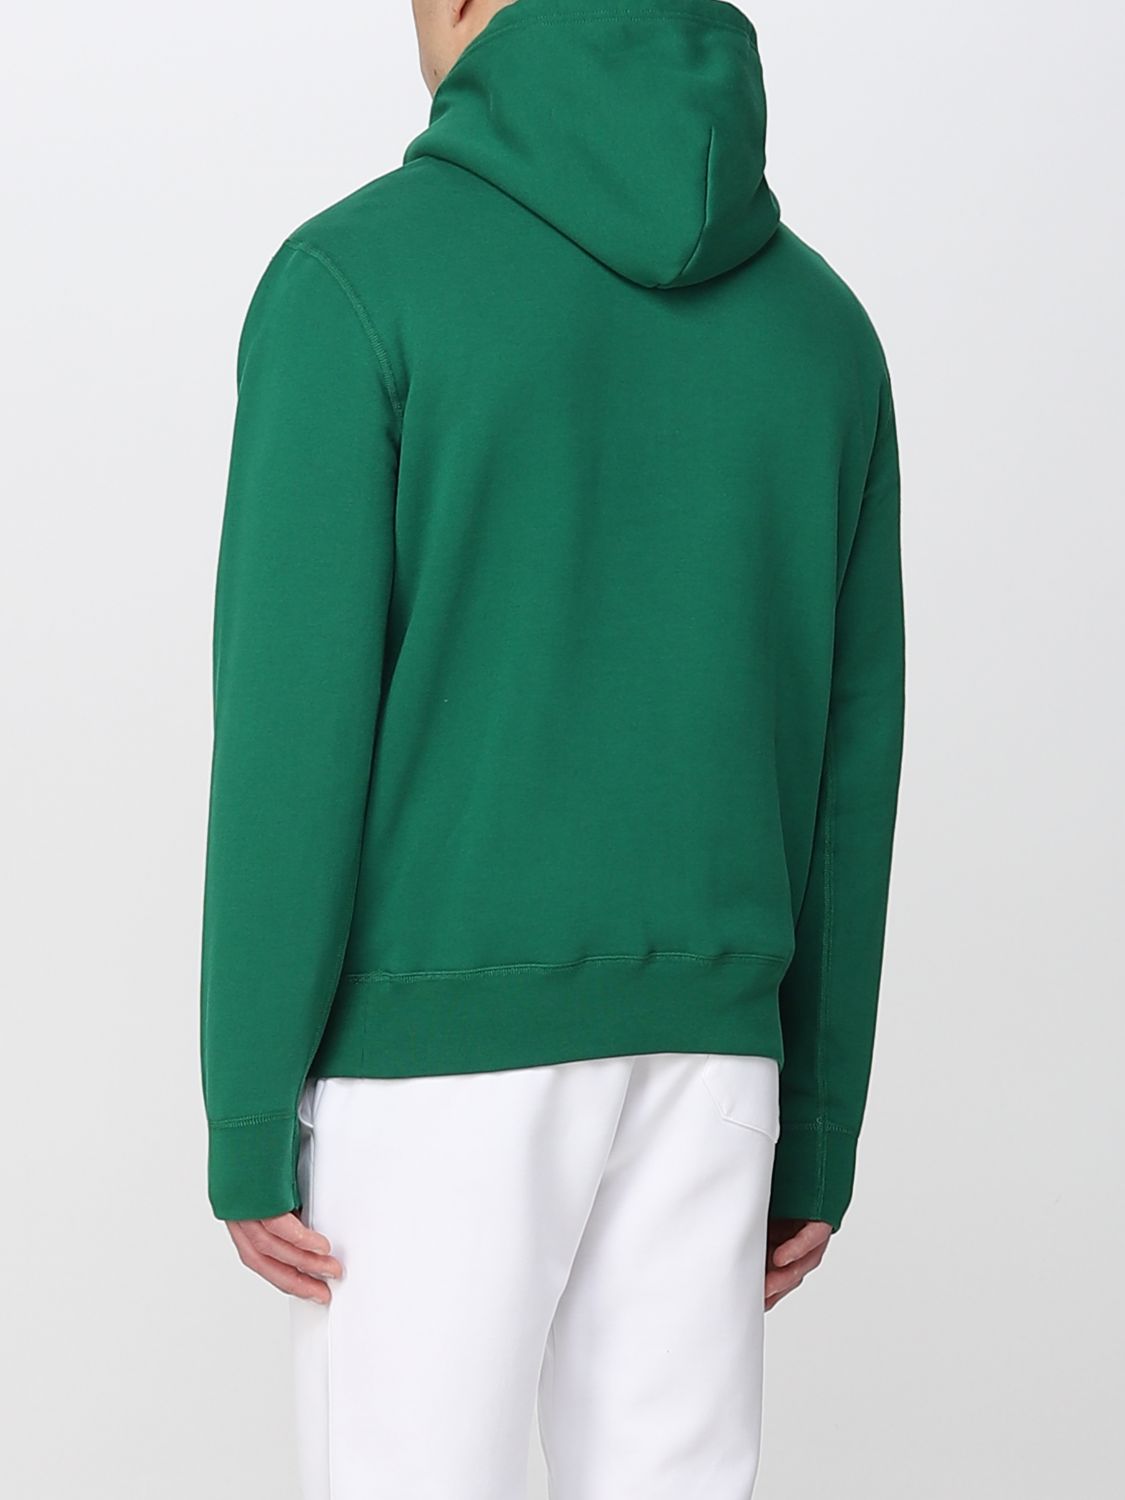 Polo Ralph Lauren Outlet: sweatshirt for man - Green | Polo Ralph Lauren  sweatshirt 710766778 online on 